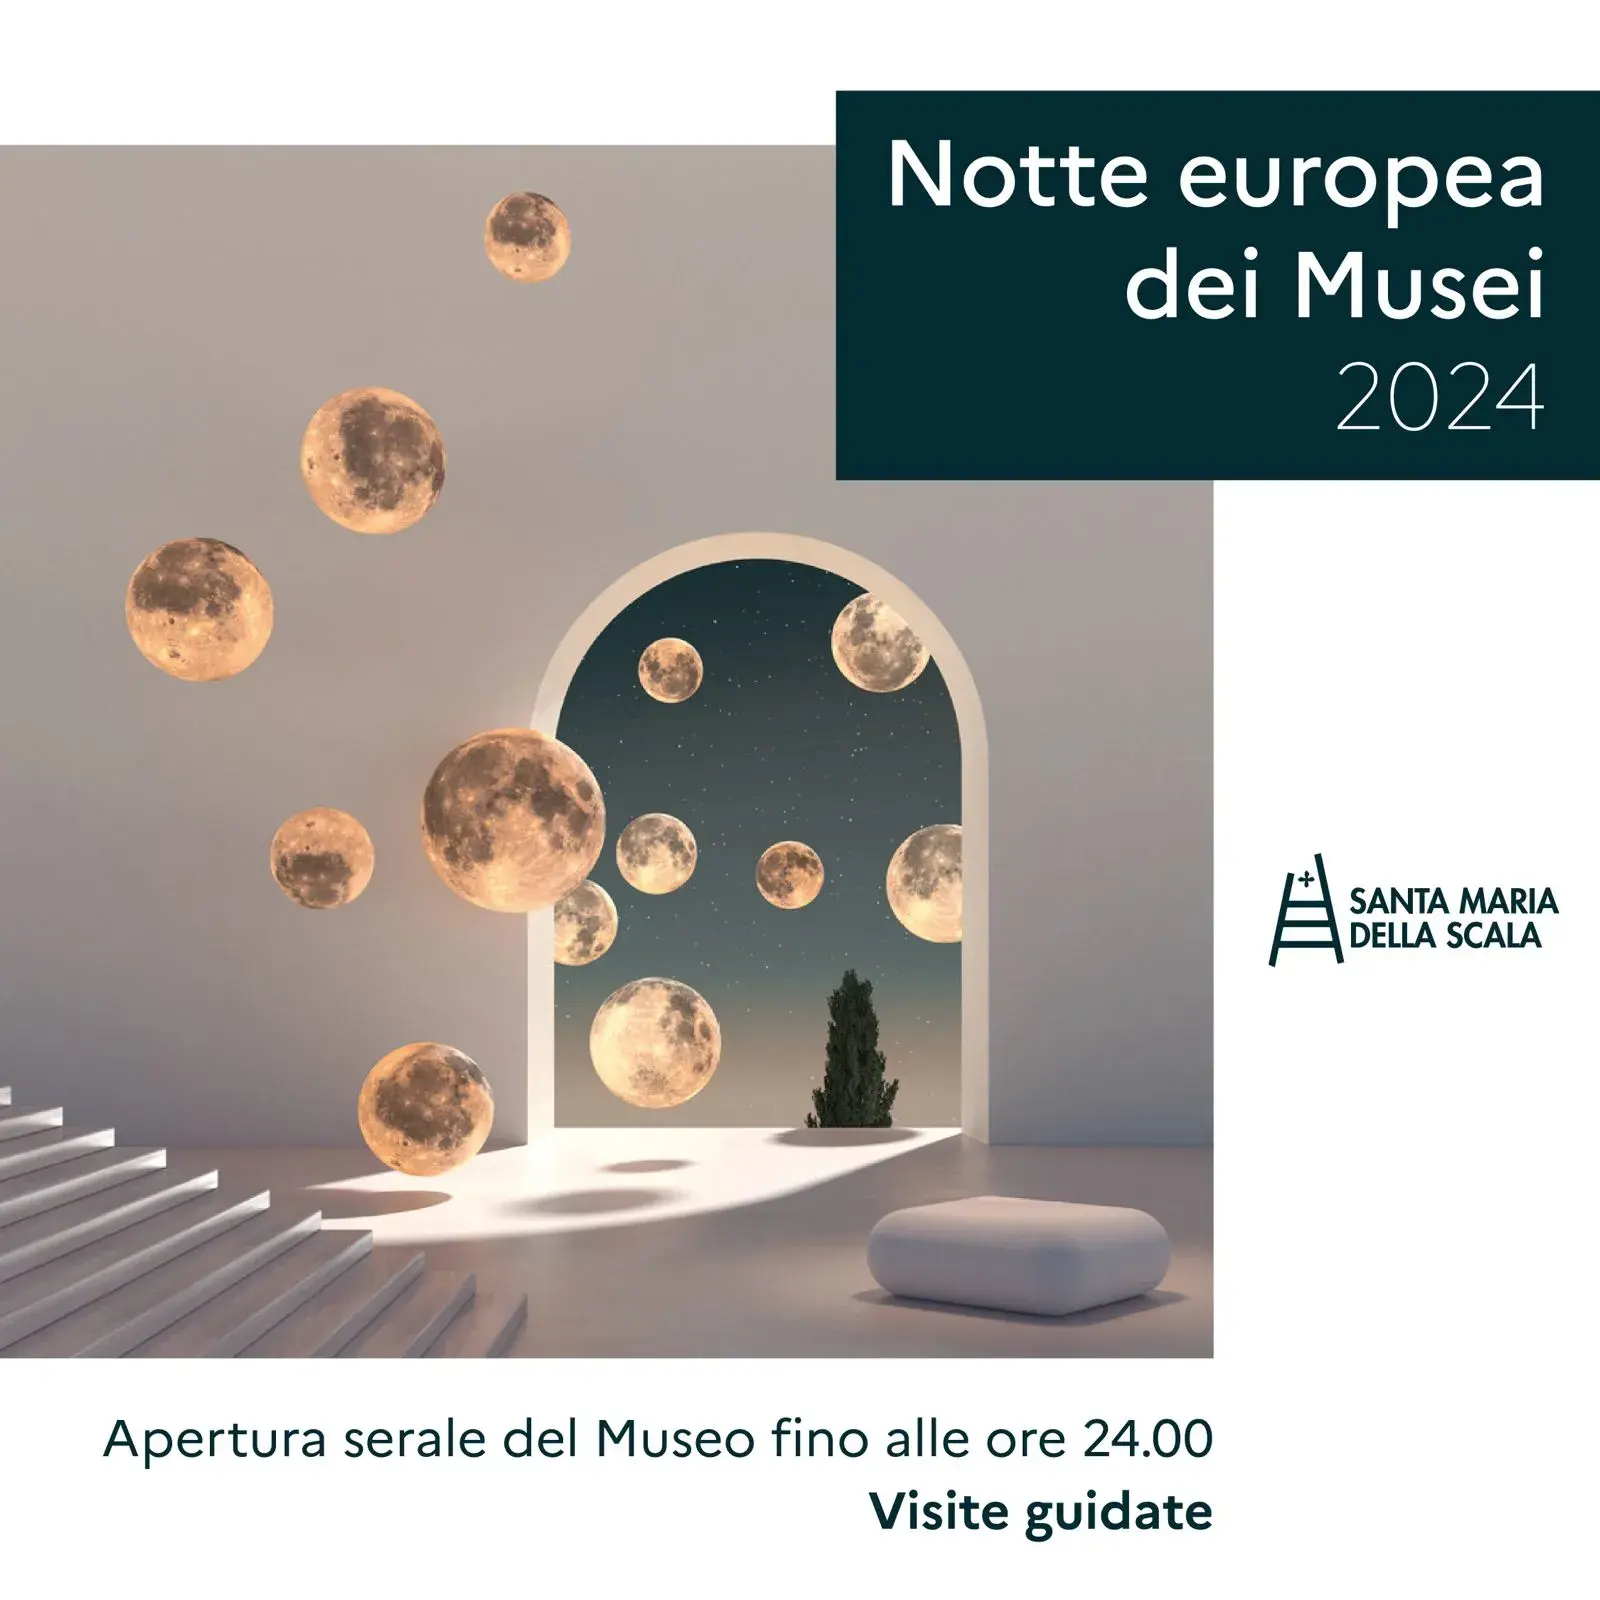 Notte europea dei musei 2024